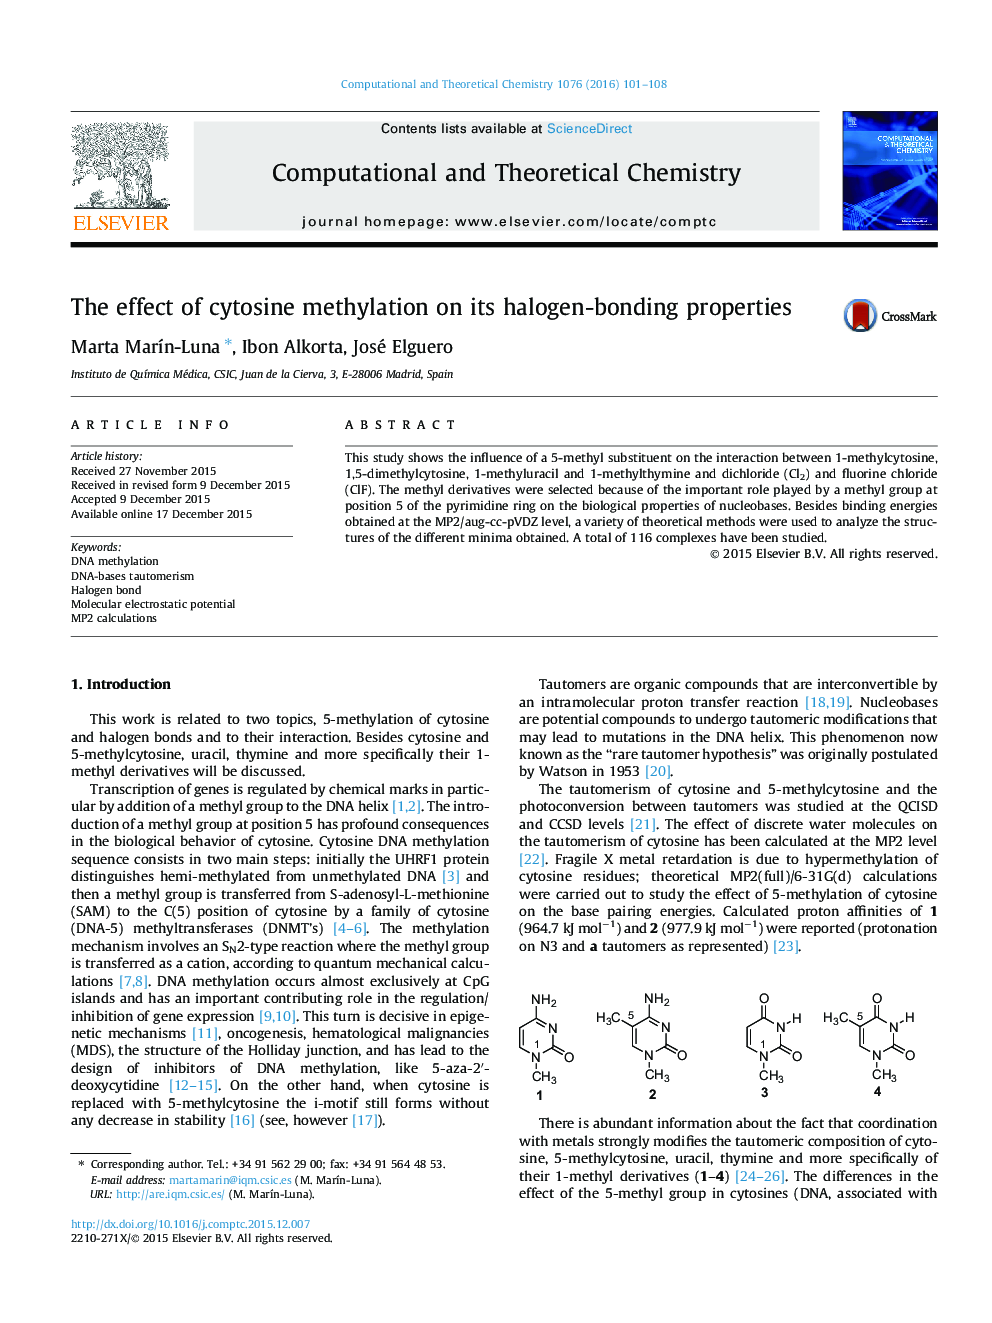 The effect of cytosine methylation on its halogen-bonding properties